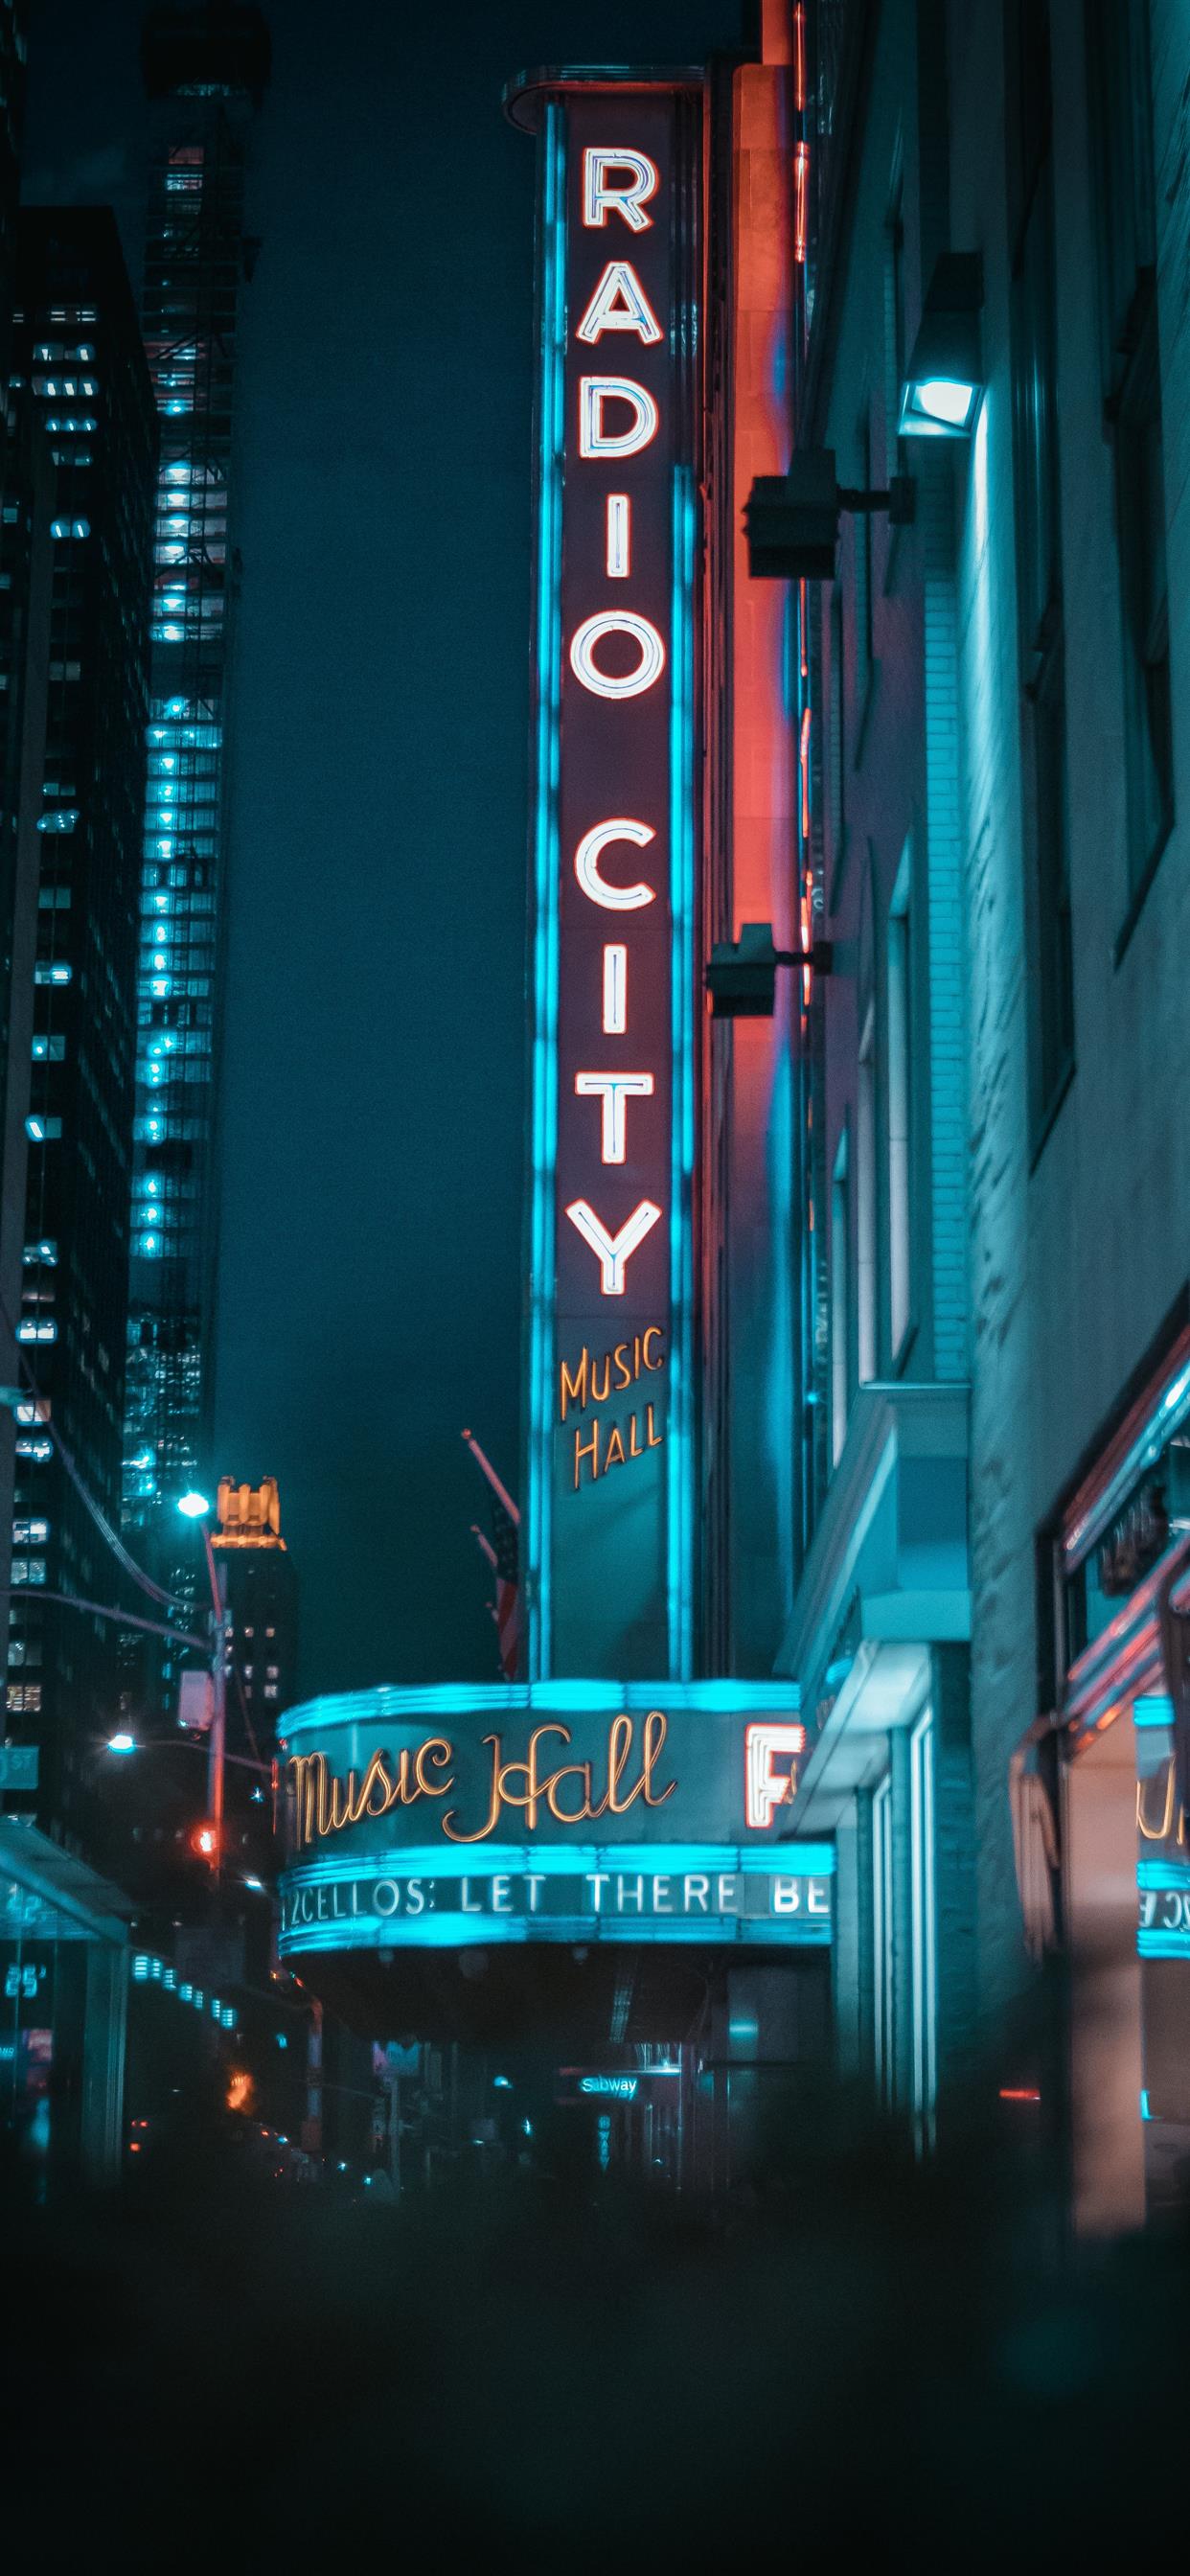 Radio City Music Hall at night with neon lights. - Neon, New York